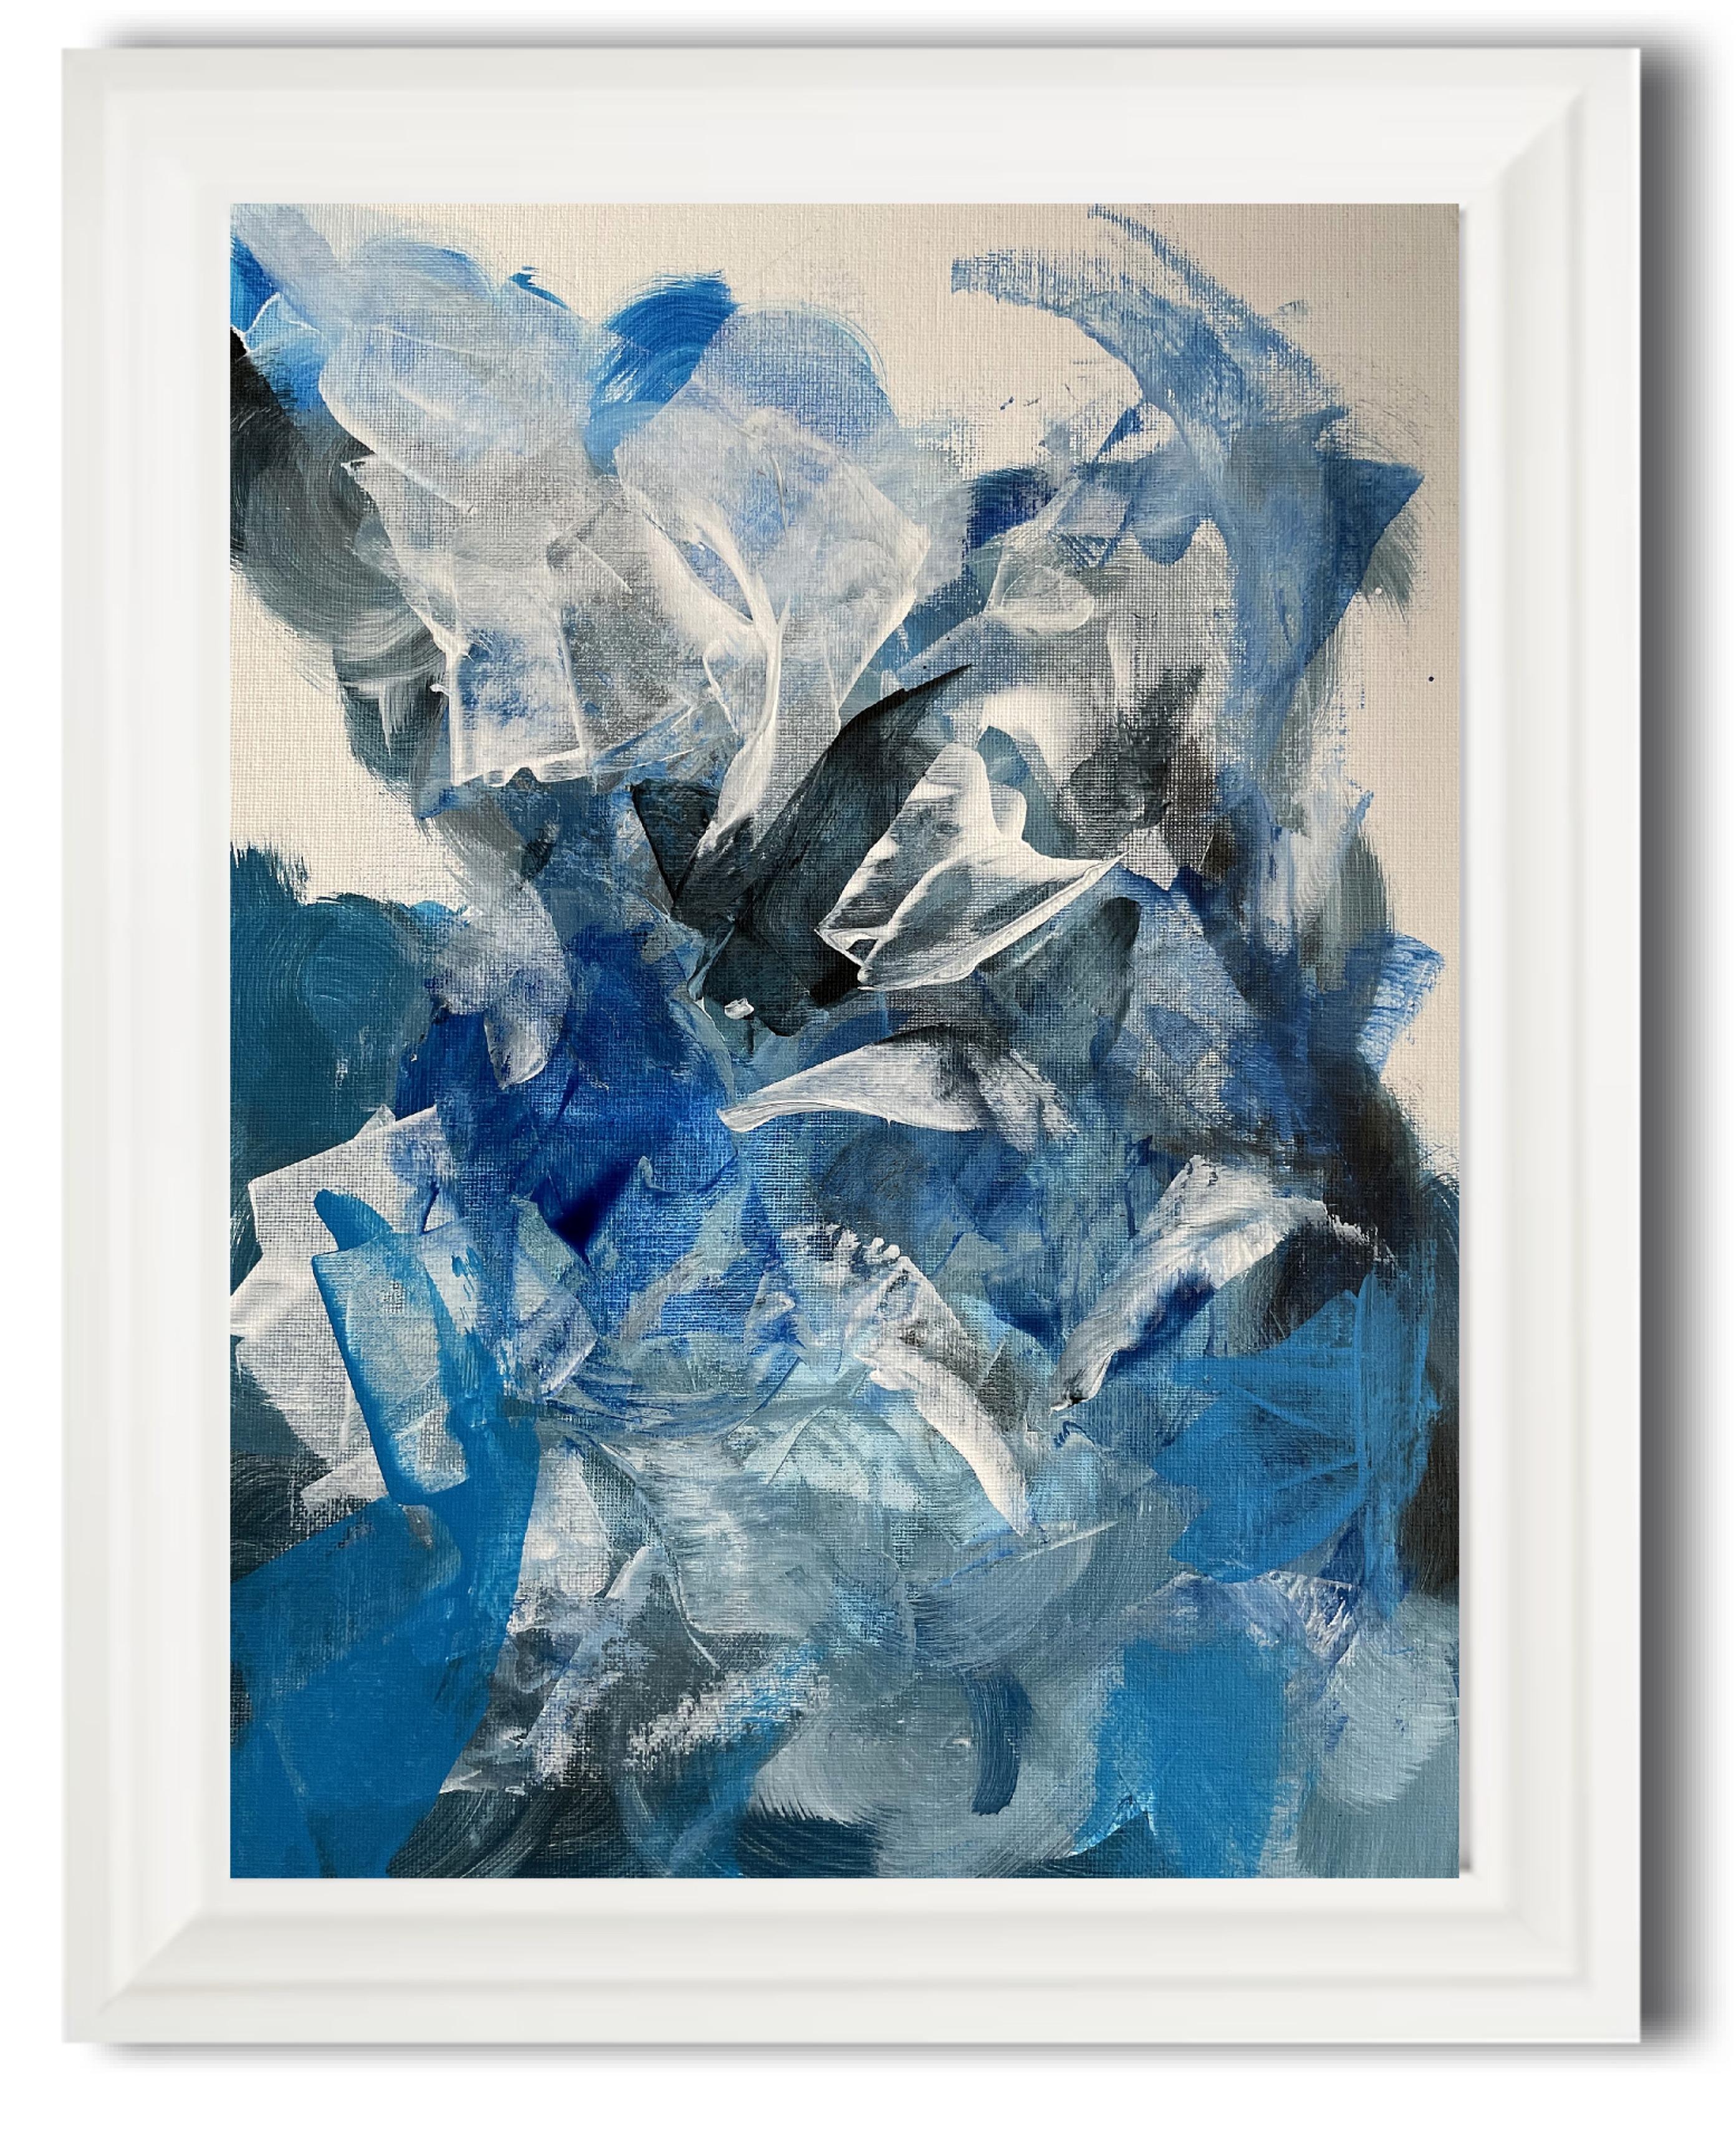 Juan Jose Garay Abstract Painting - Imagine is Real 01